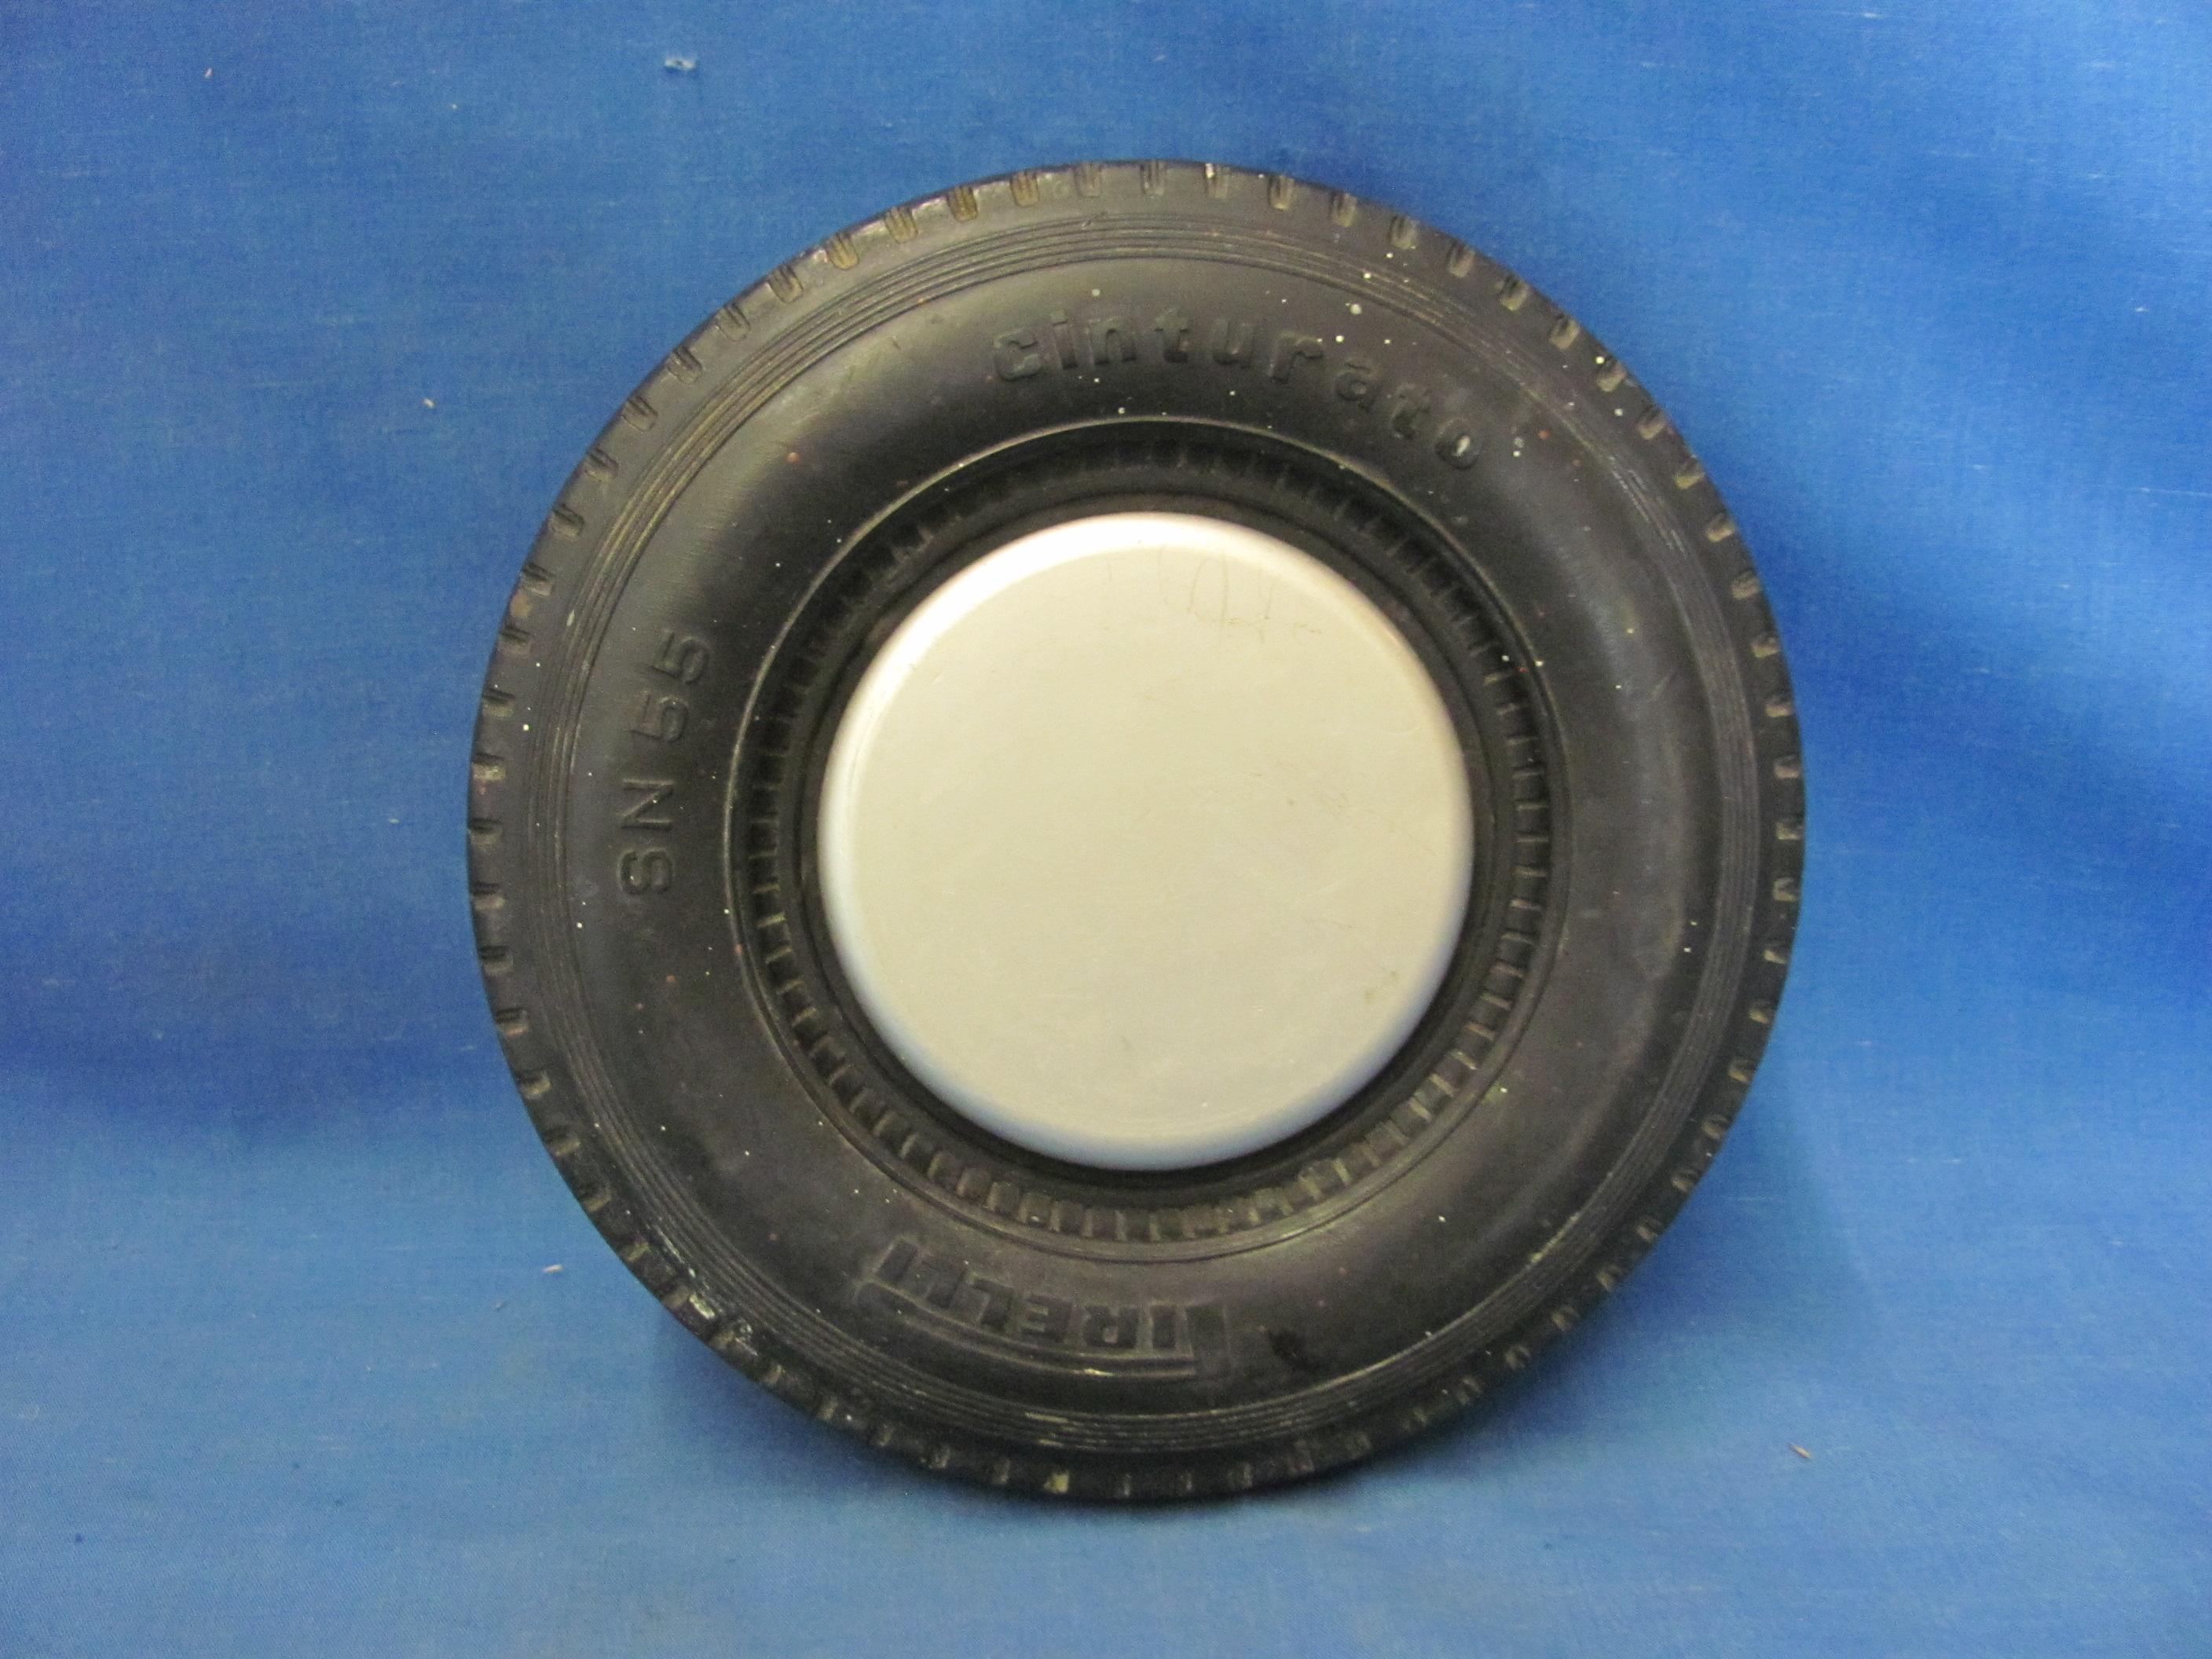 Firelli Cinturato Rubber Tire With Aluminum Dish – 5 3/4” D – As Shown